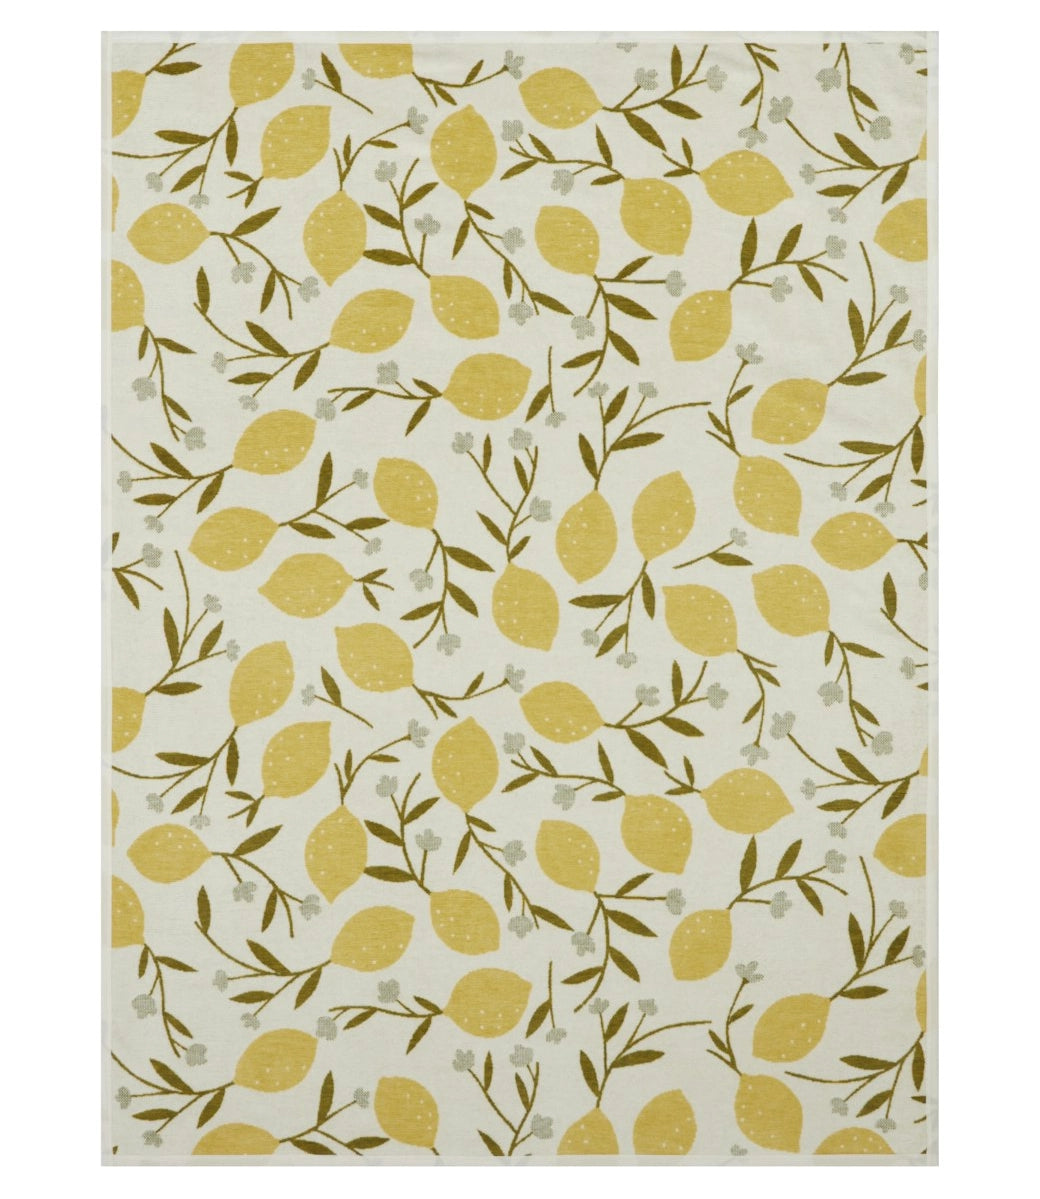 ChappyWrap Lemon Blossoms Blanket - Original Size